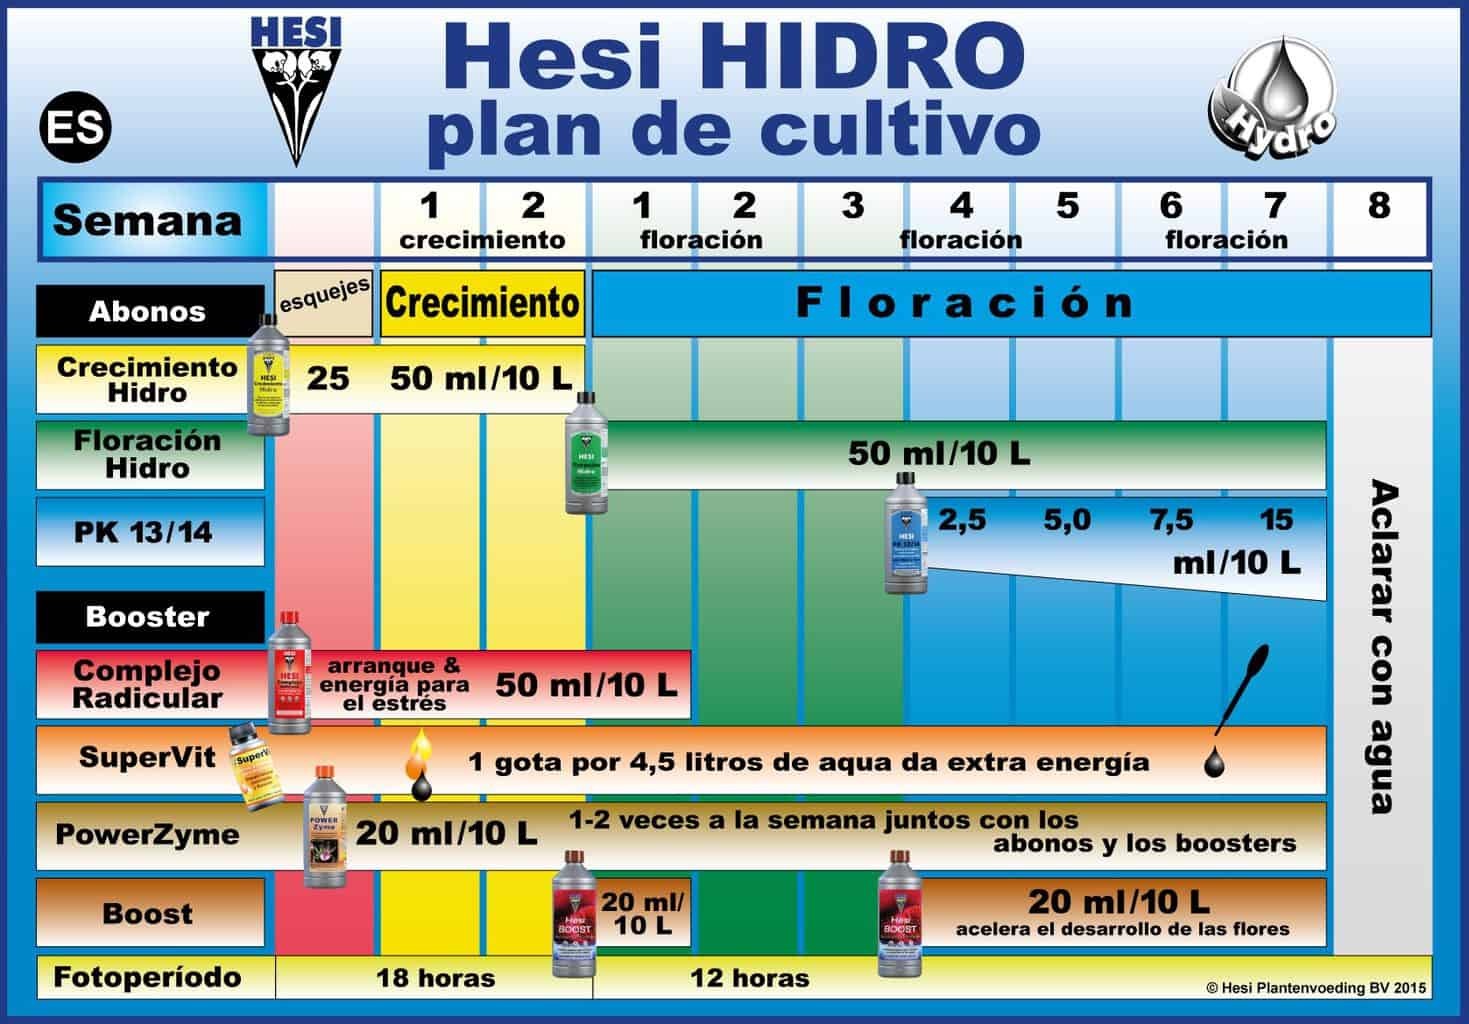 tabla-de-cultivo-hesi-hidro 3